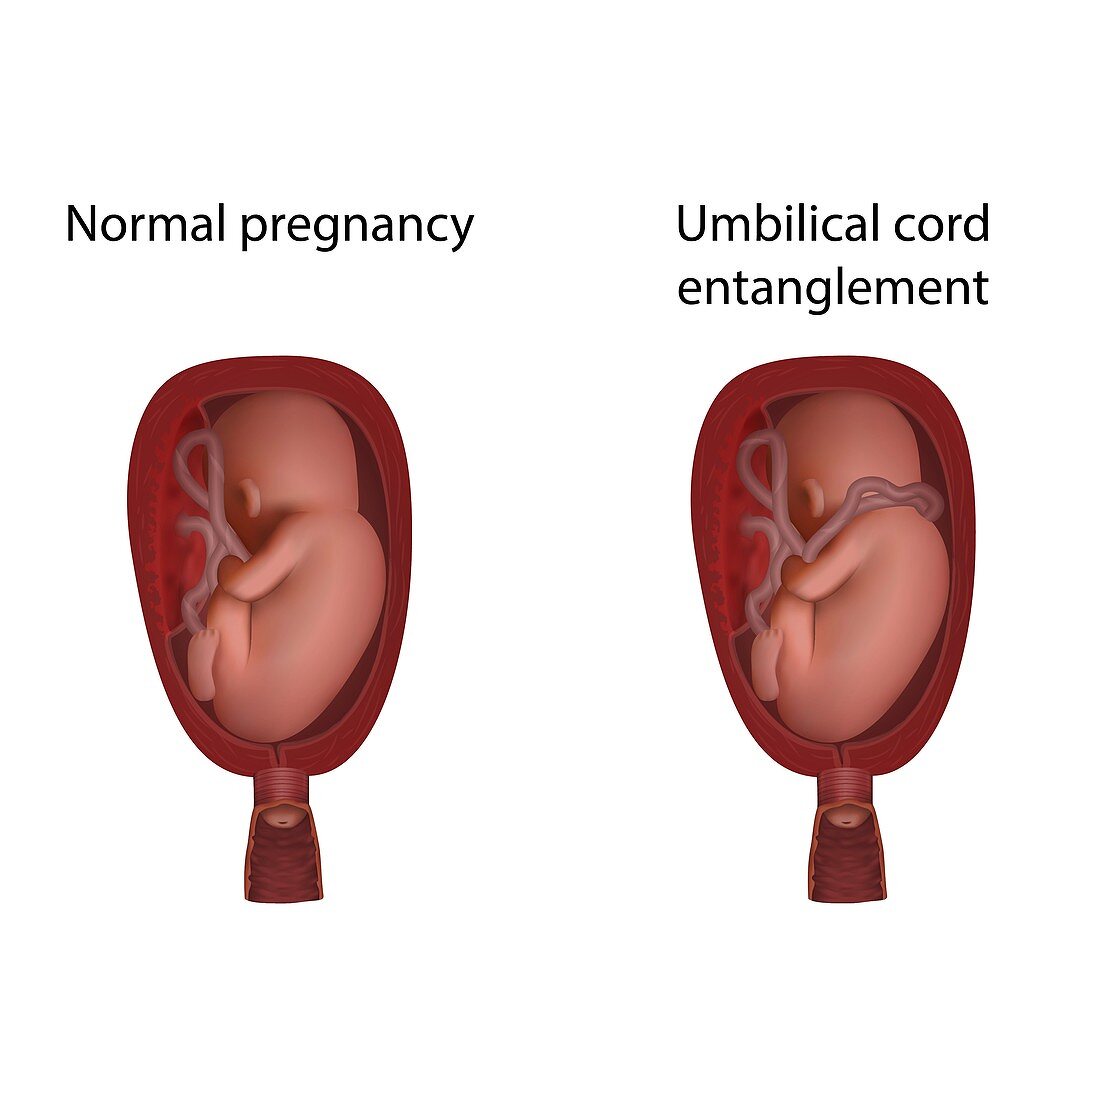 Umbilical cord entanglement in pregnancy, illustration